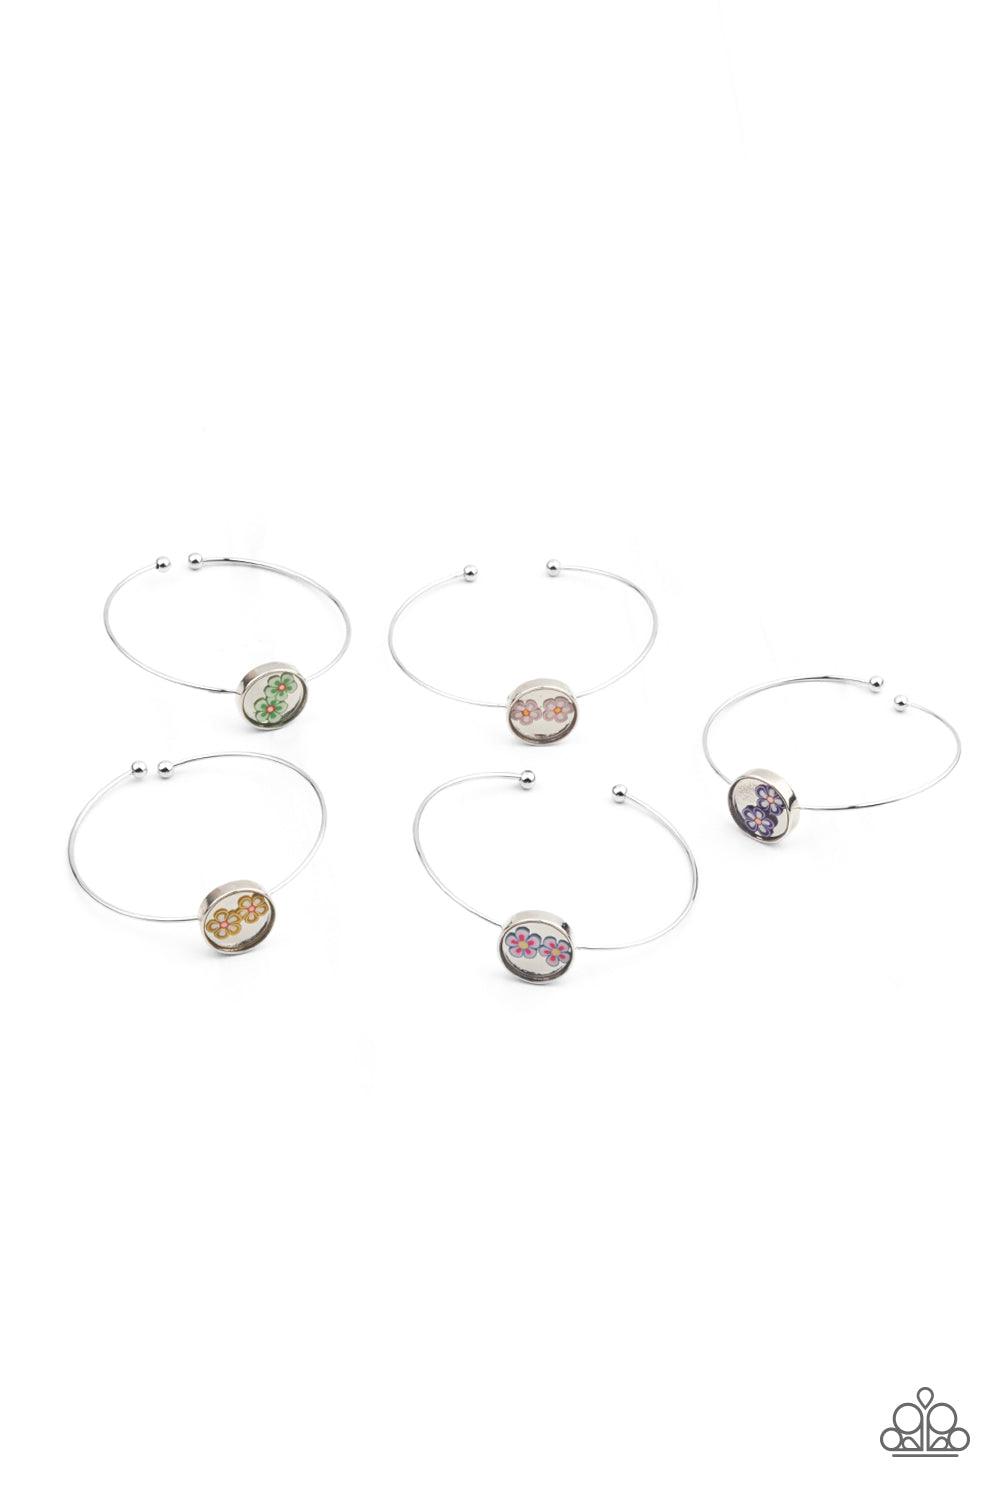 Starlet Shimmer Springtime Cuff Bracelets - Jewelry by Bretta